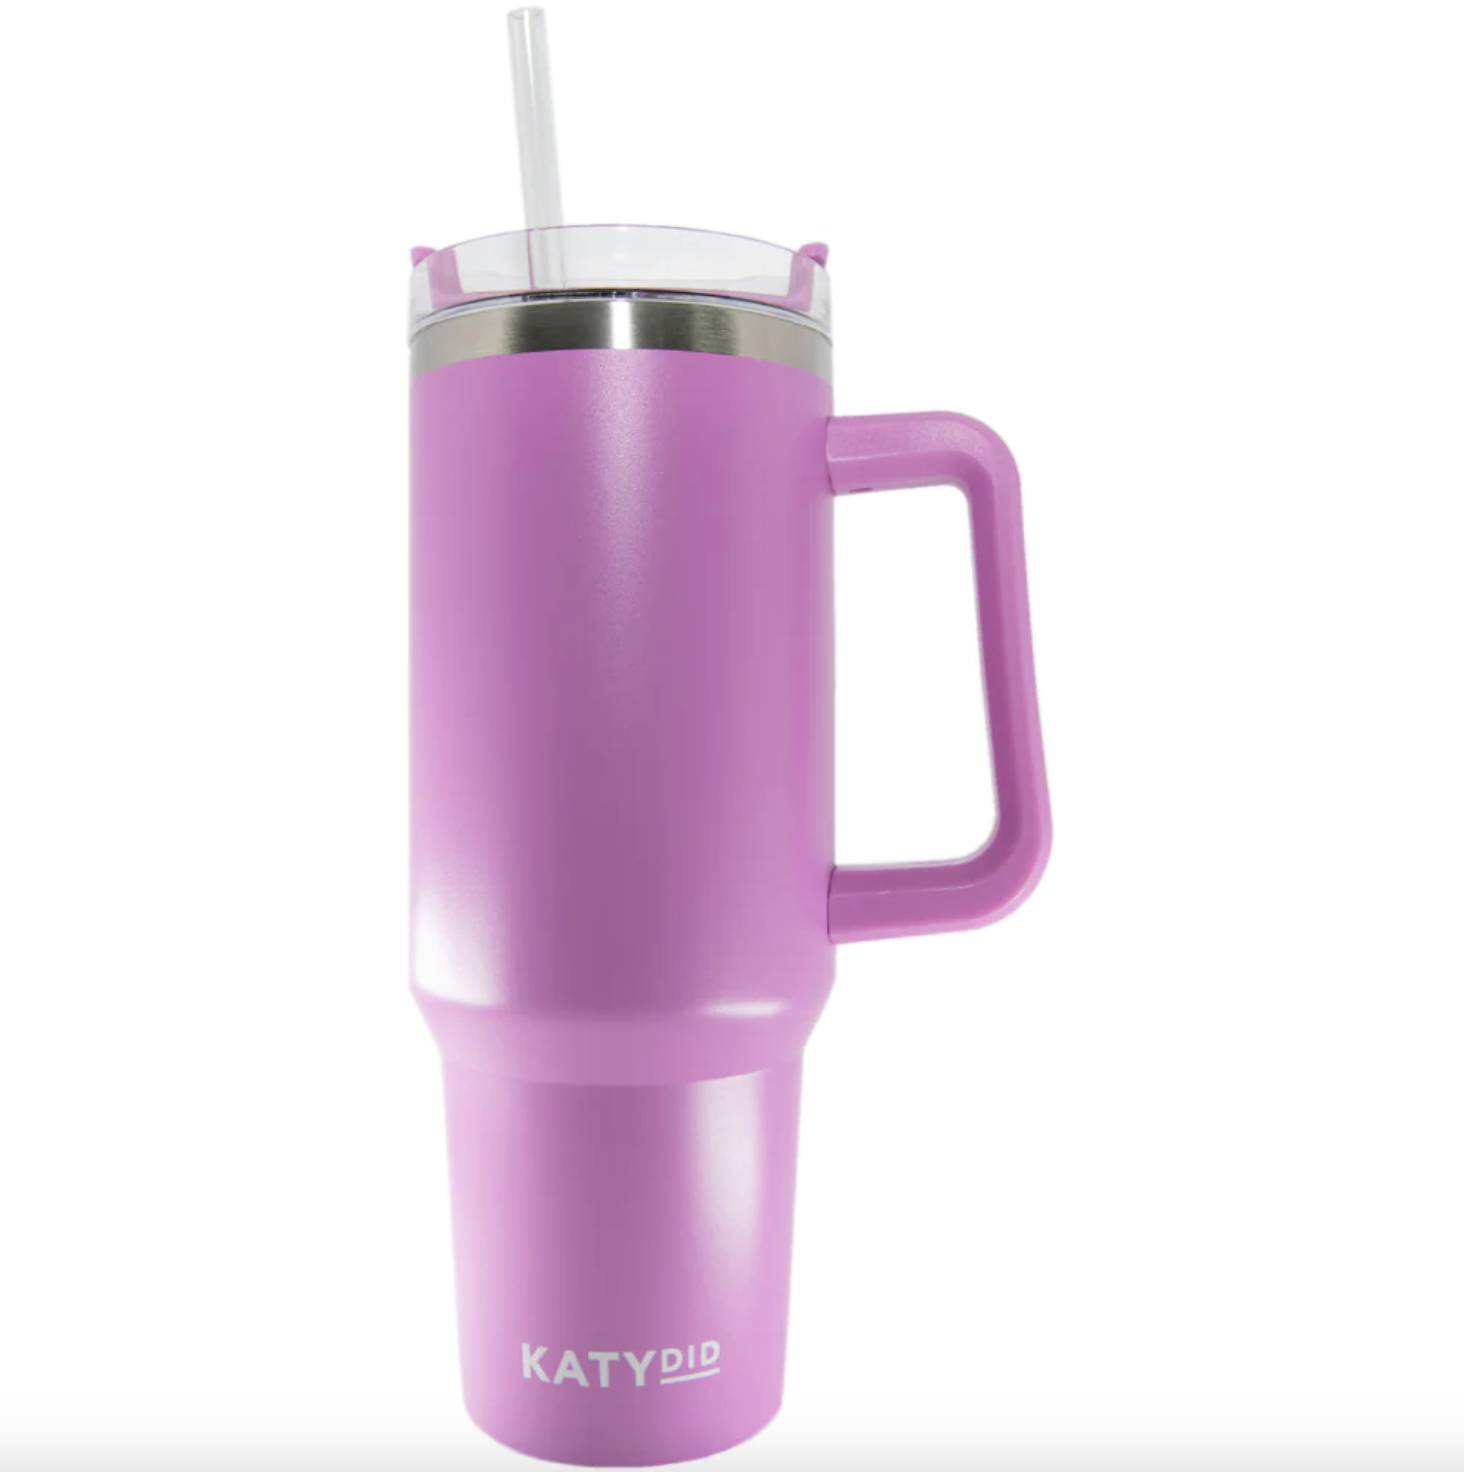 Katydid Pastel Happy Face Tumbler Cup with Handle